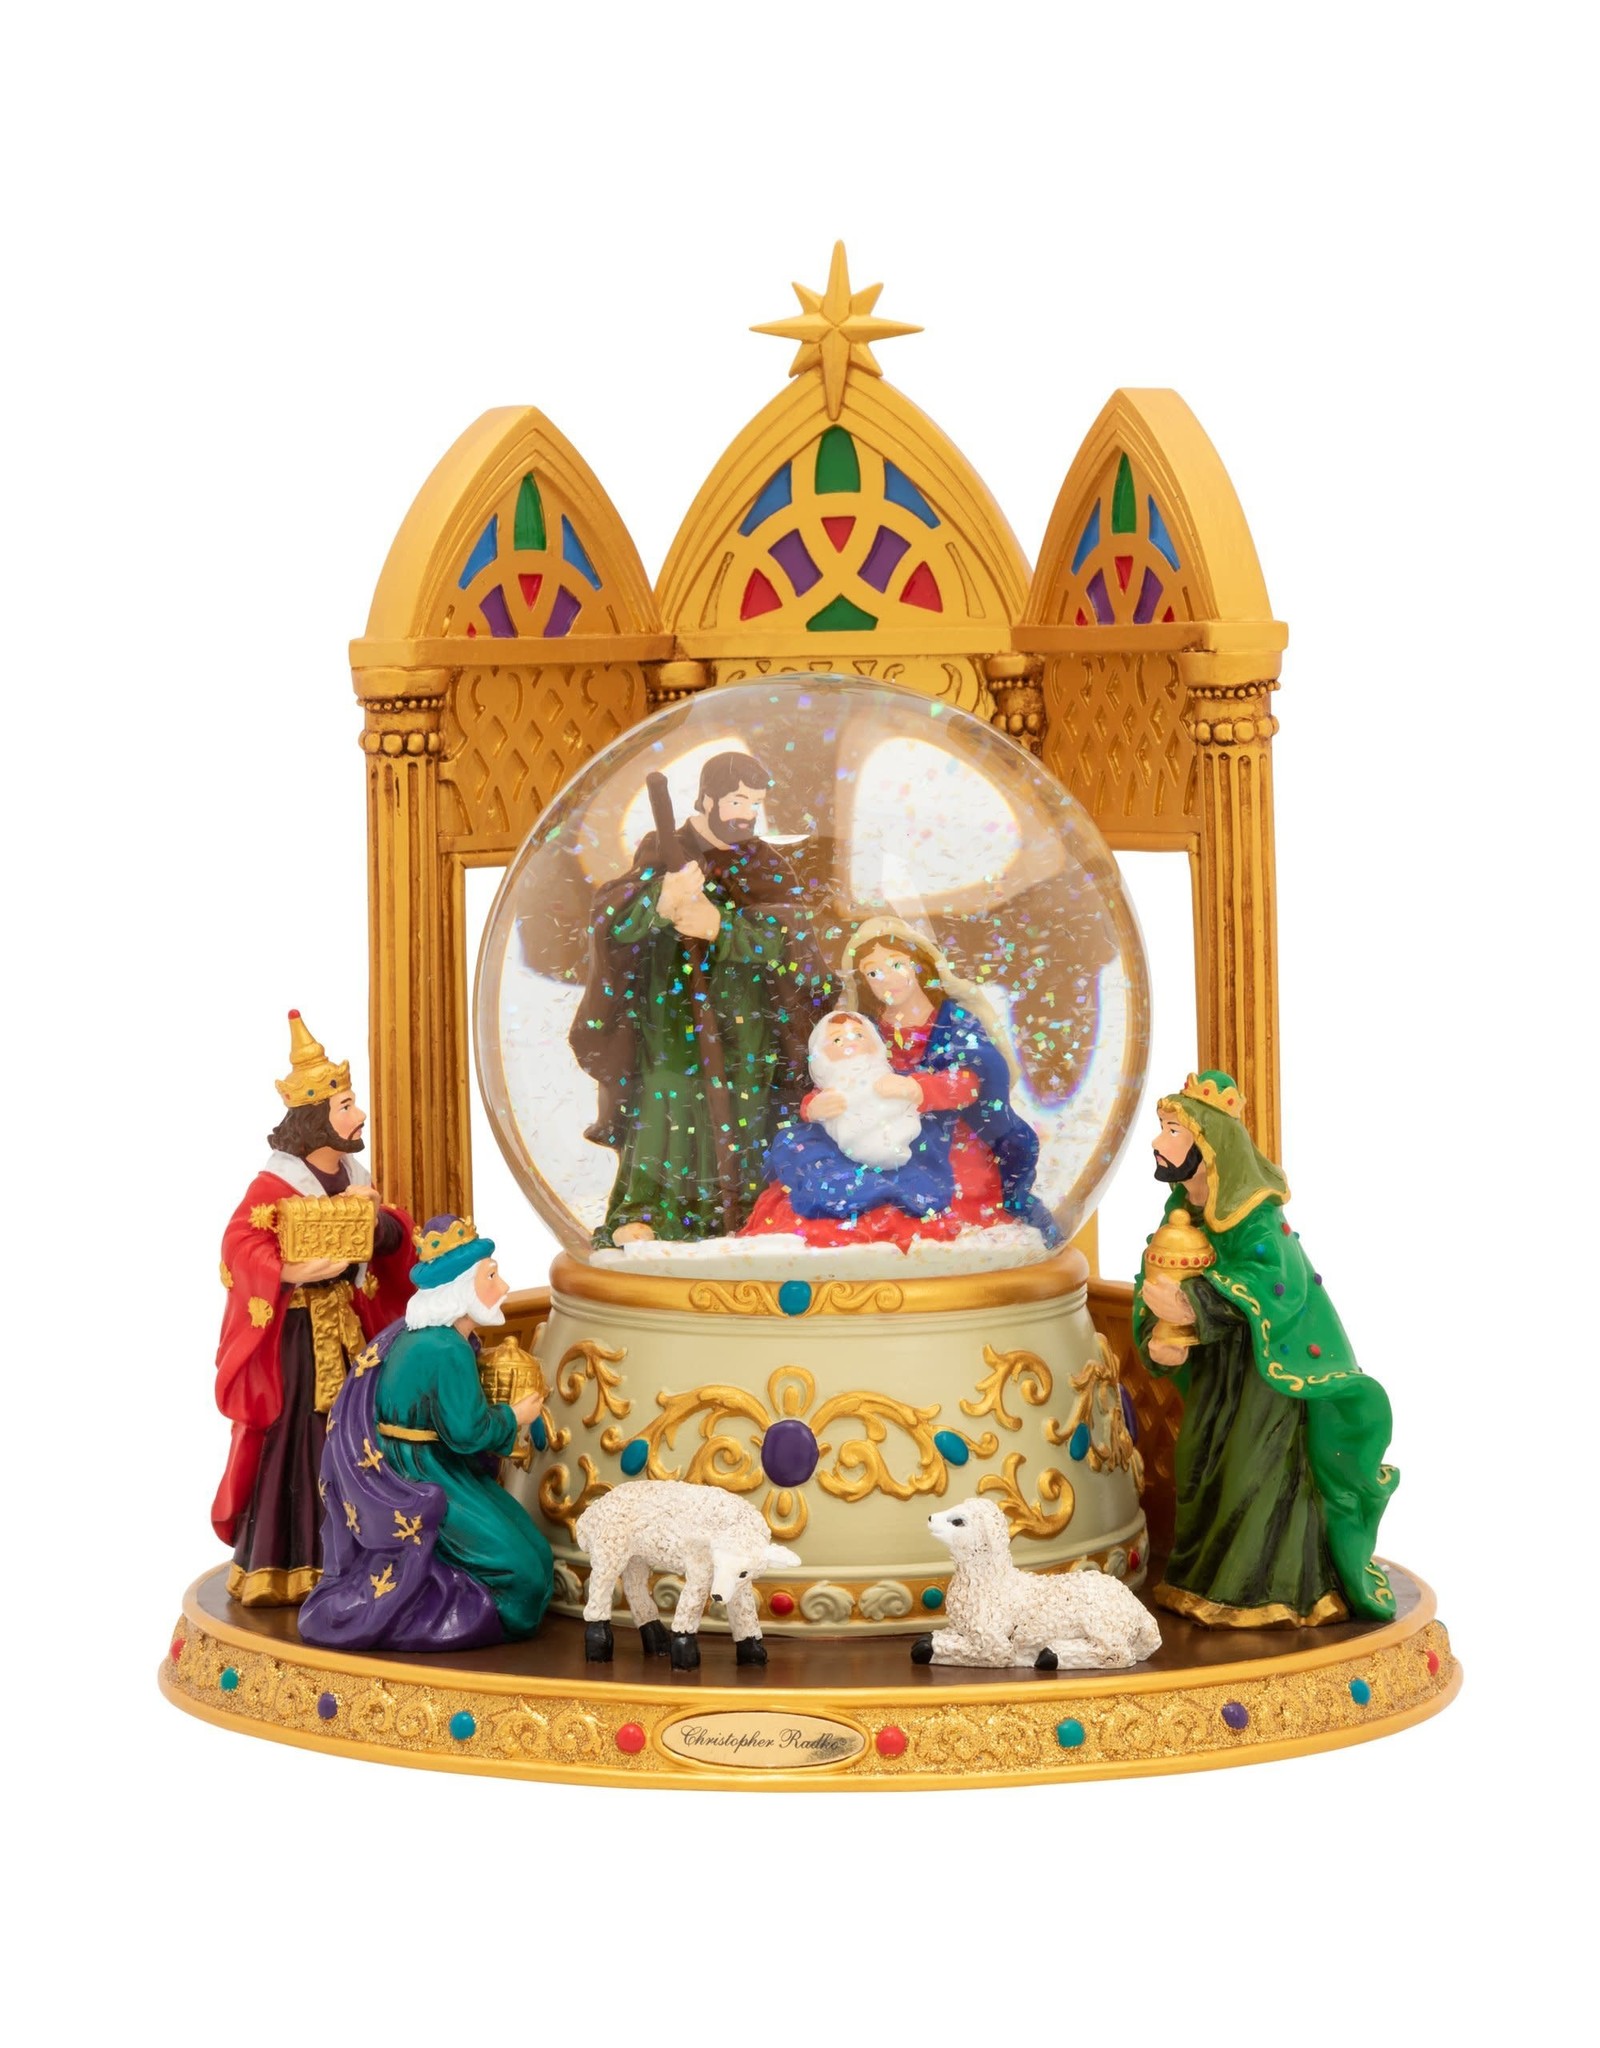 Christopher Radko Snowglobes Heavenly Gift Nativity Snow-globe